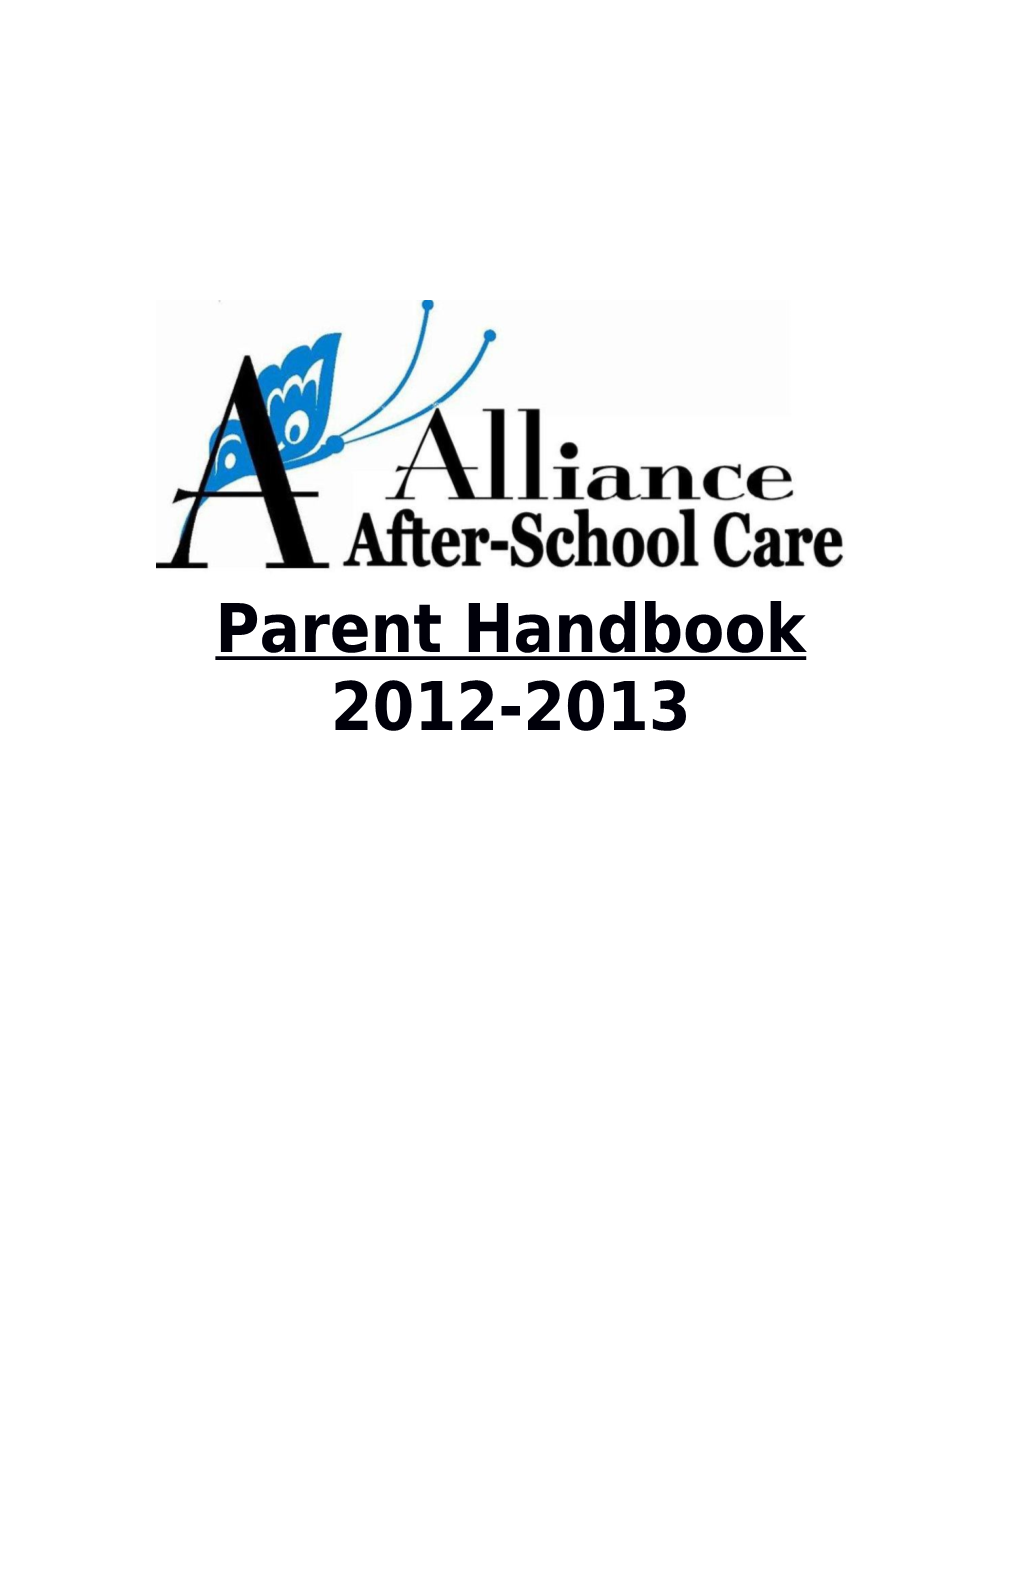 Alliance After-School Care (ASC) Sites